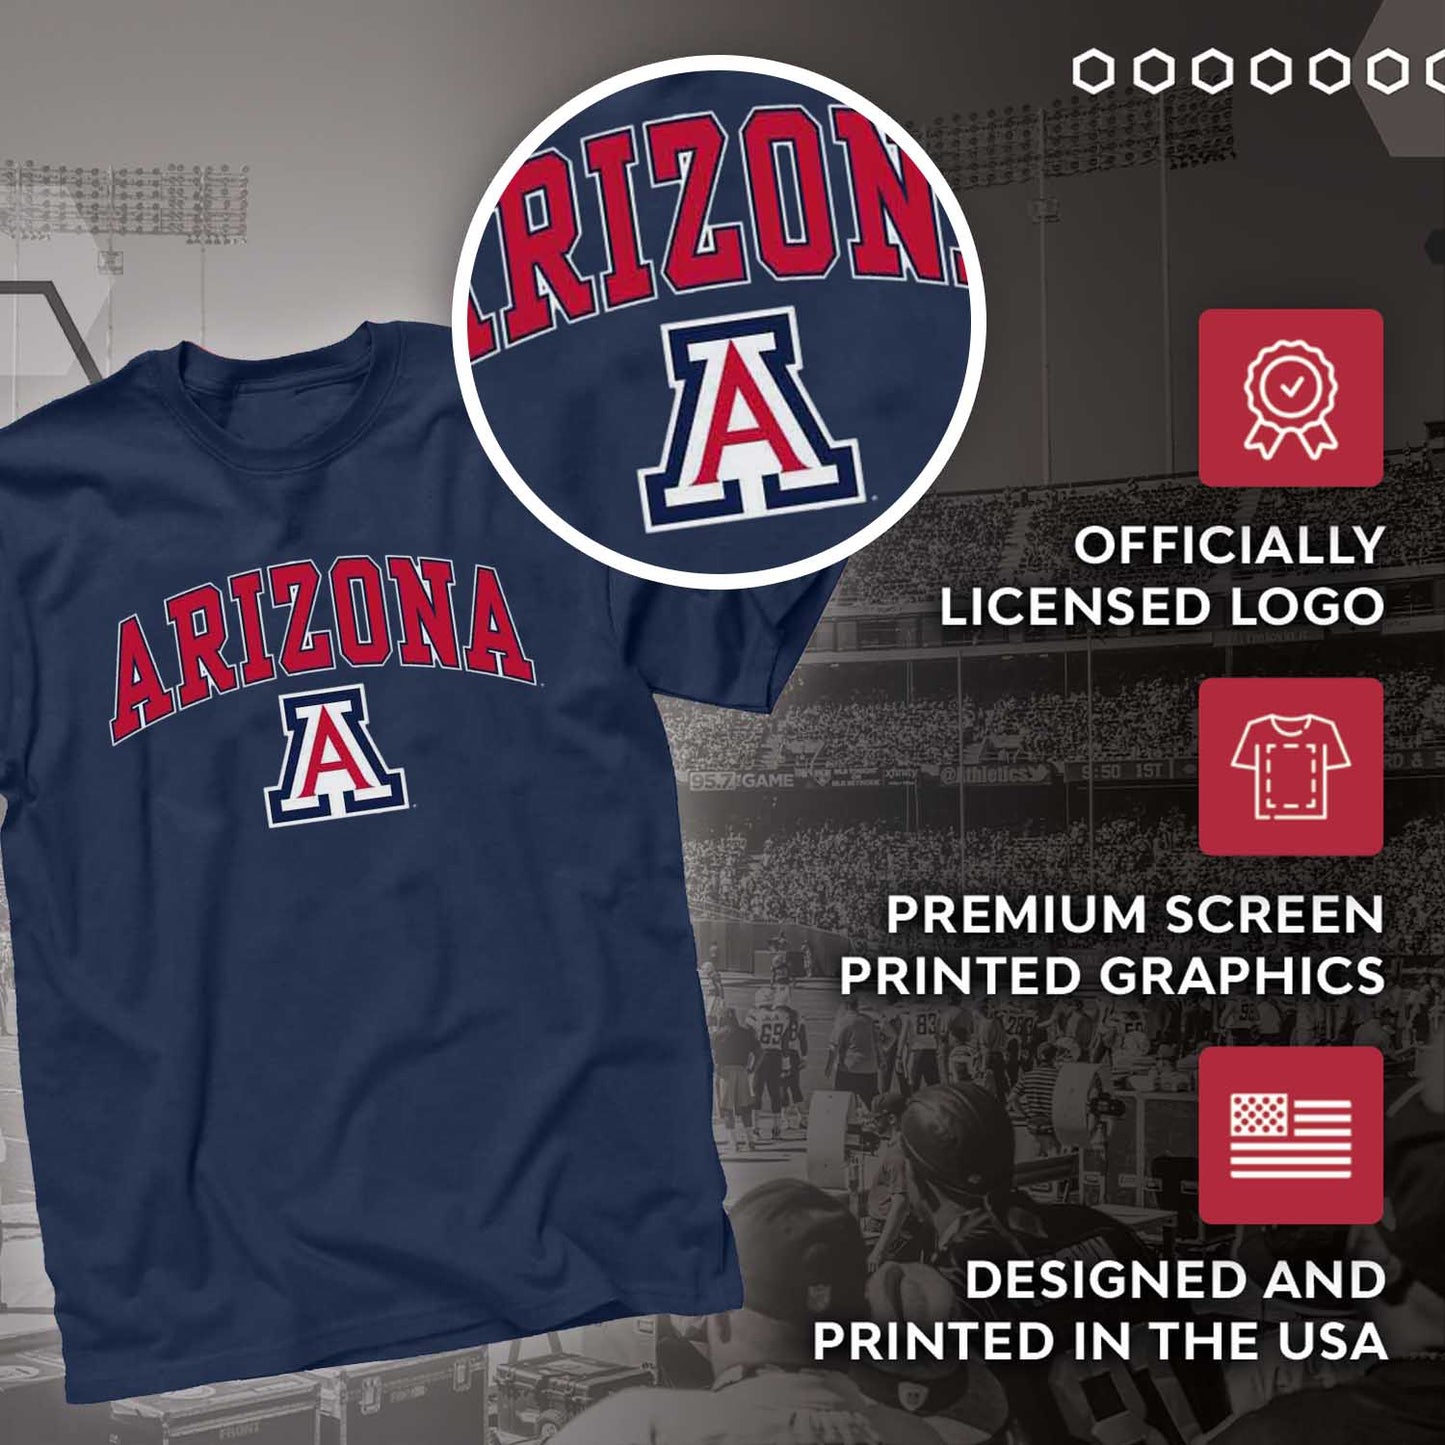 Arizona Wildcats NCAA Adult Gameday Cotton T-Shirt - Navy